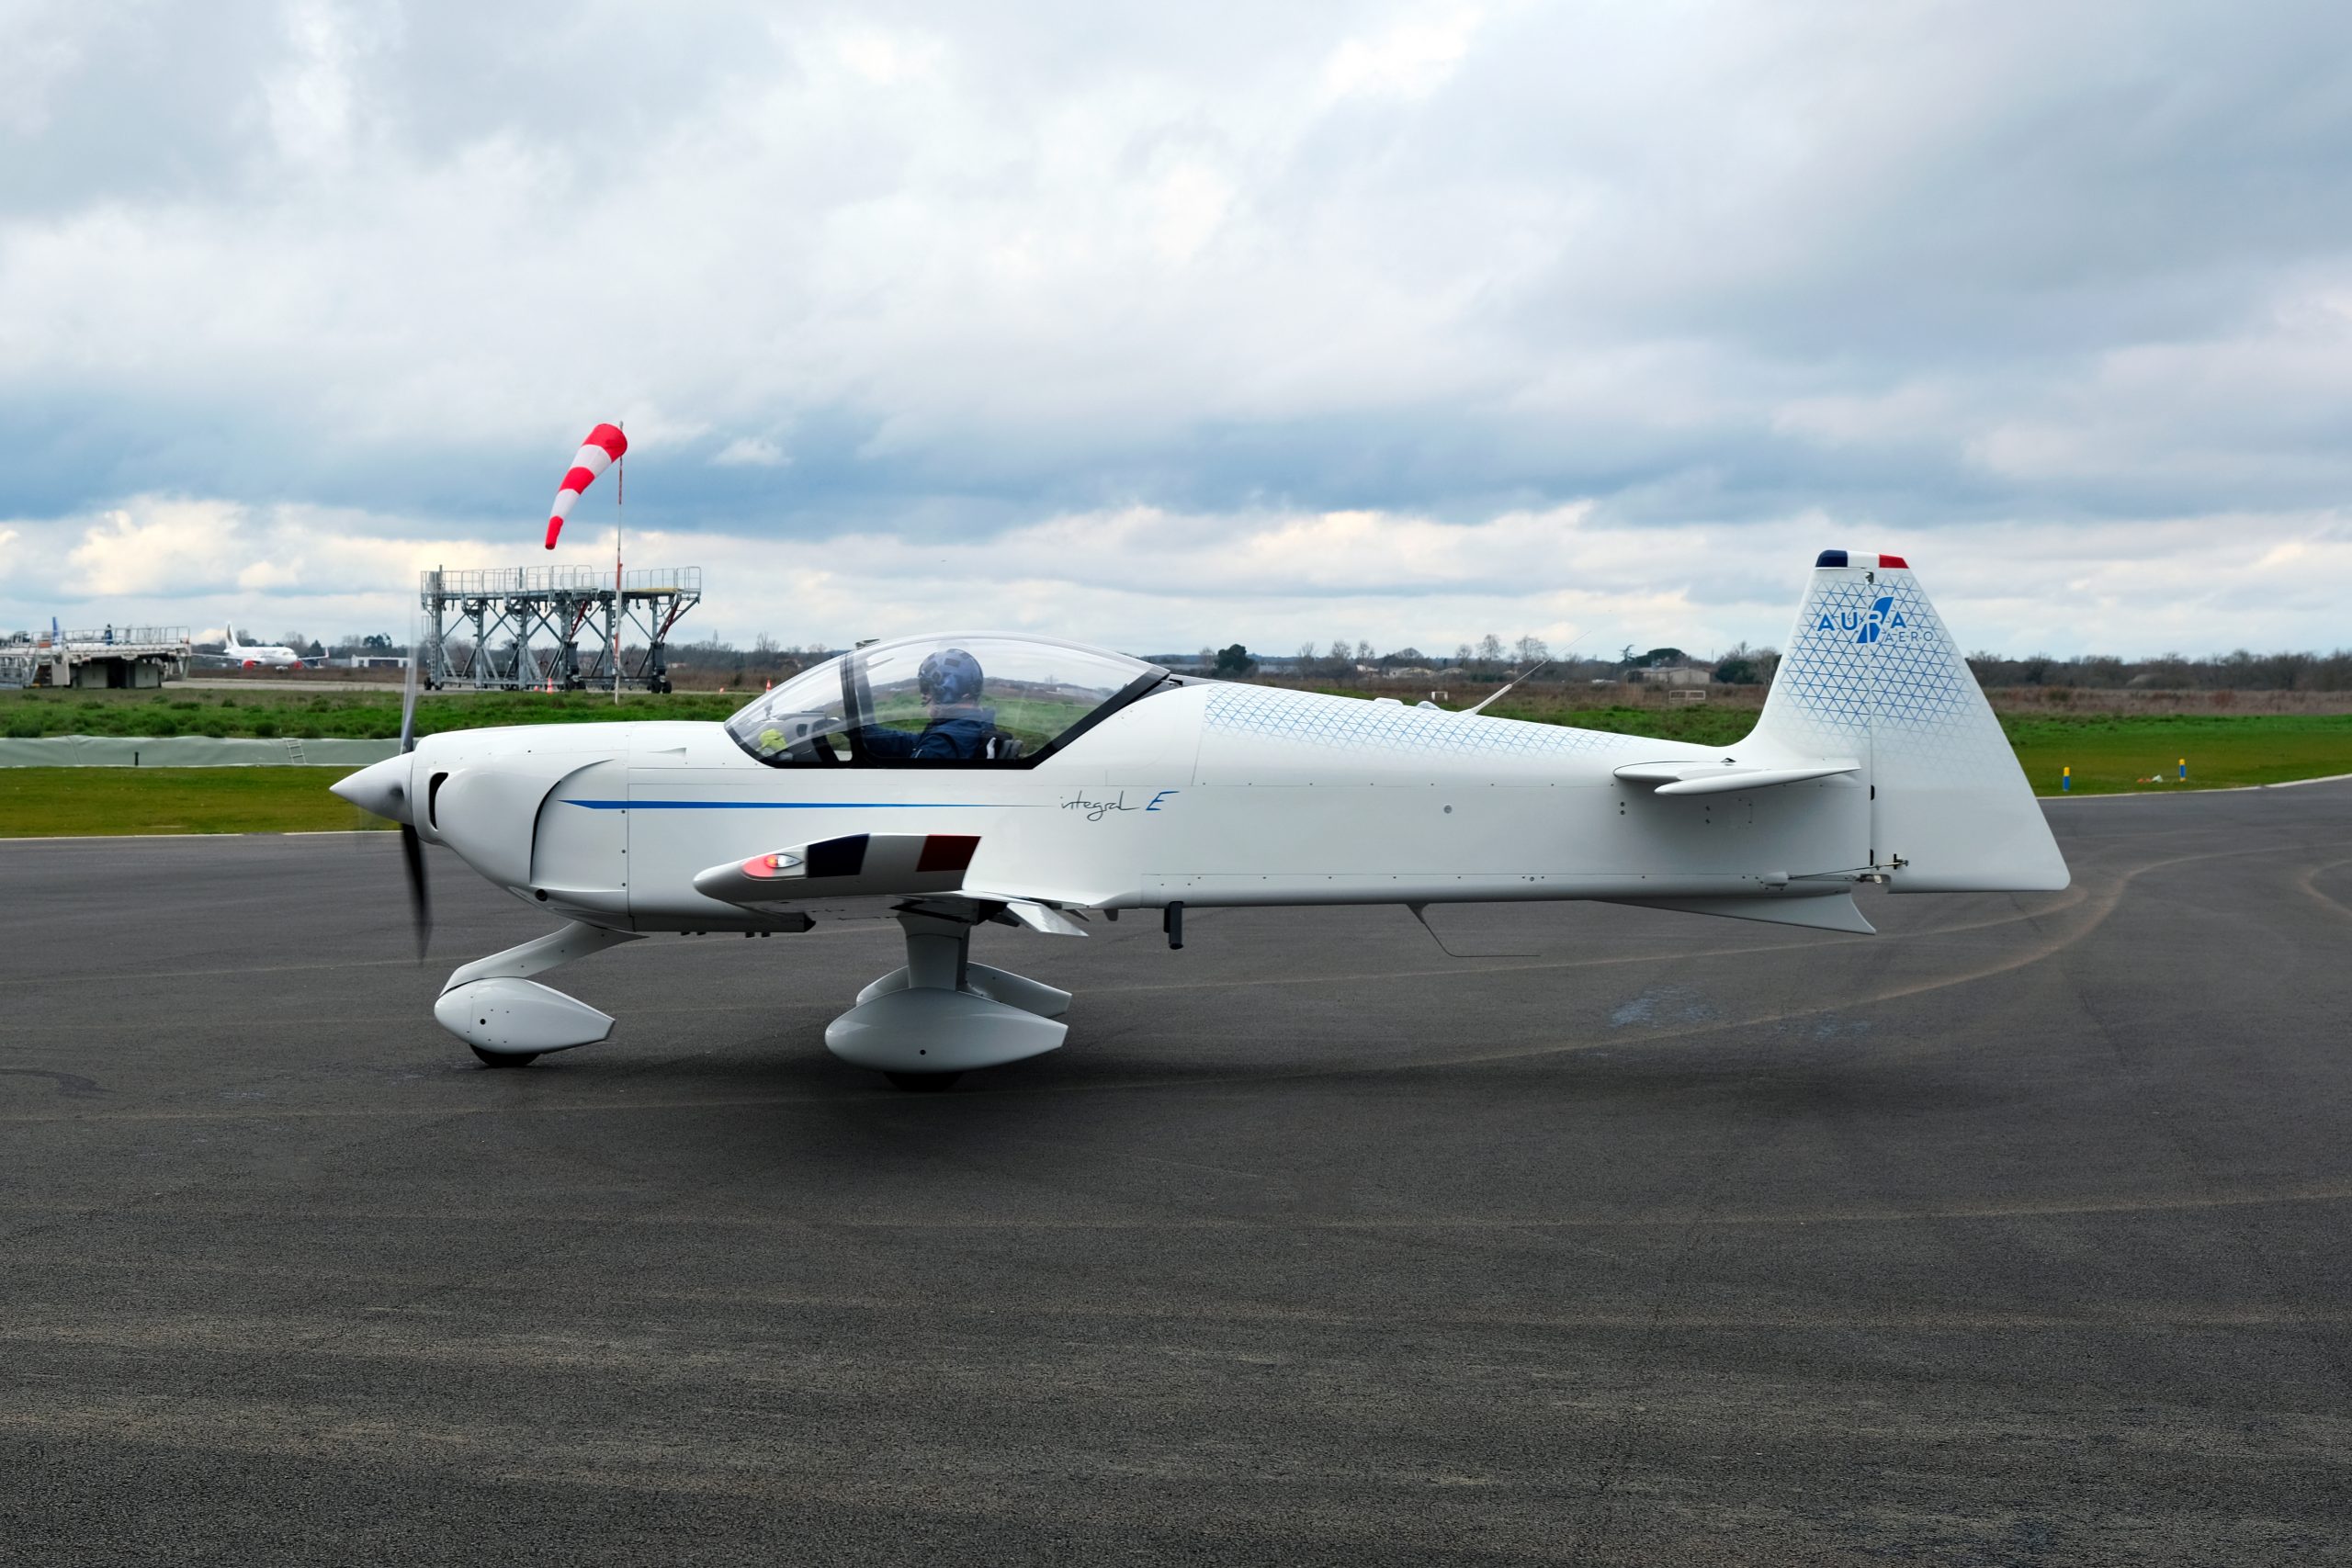 Integral E's successful power-on signals a new era in eco-friendly aviation